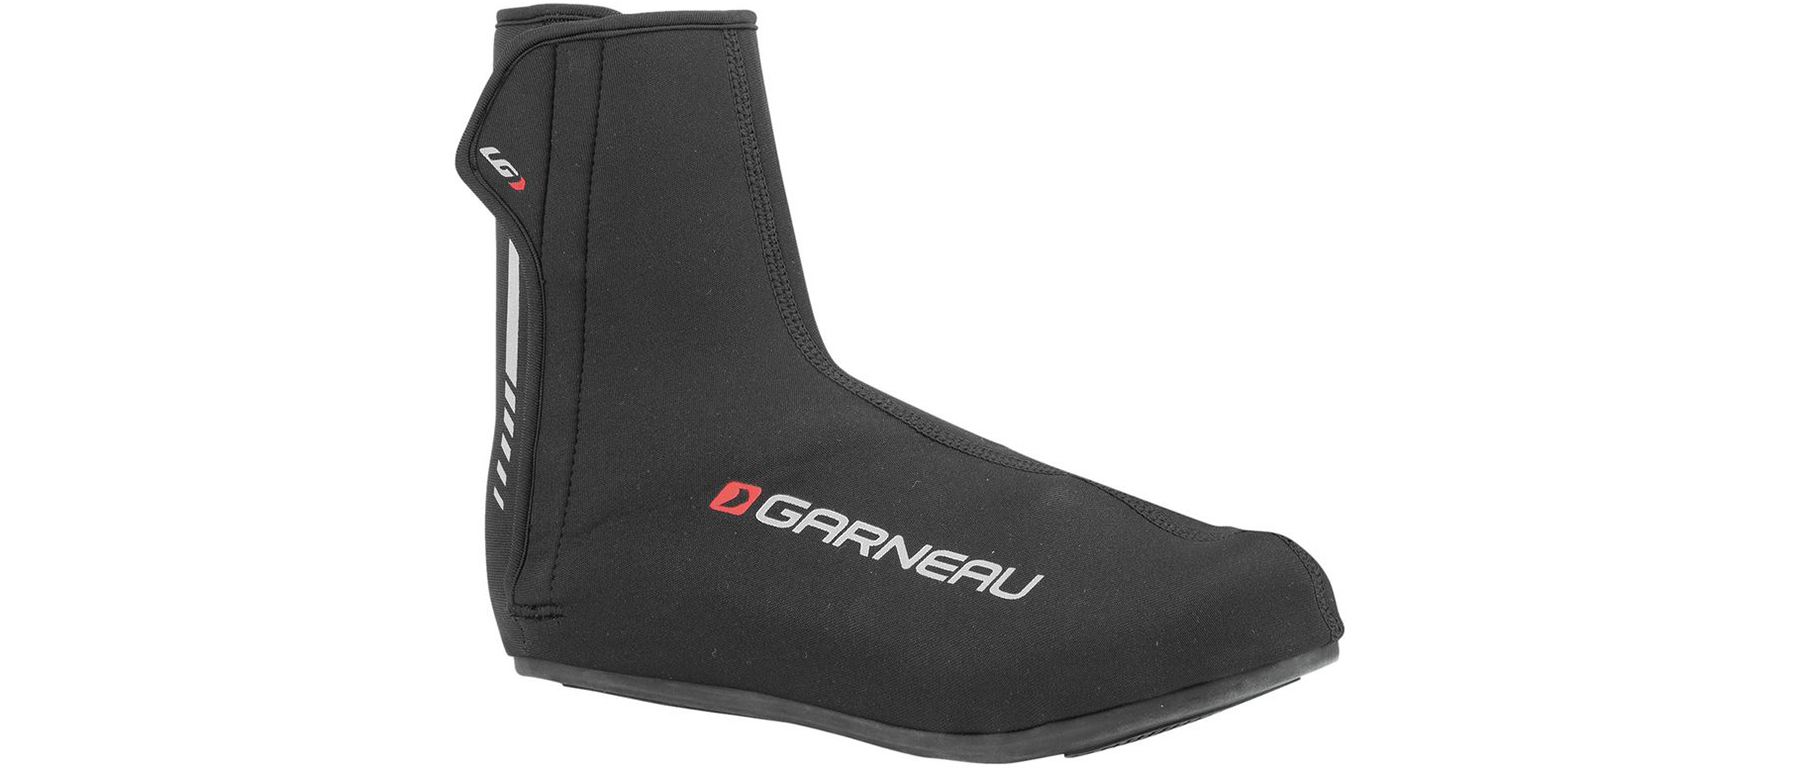 Louis Garneau Thermal Pro Shoe Covers